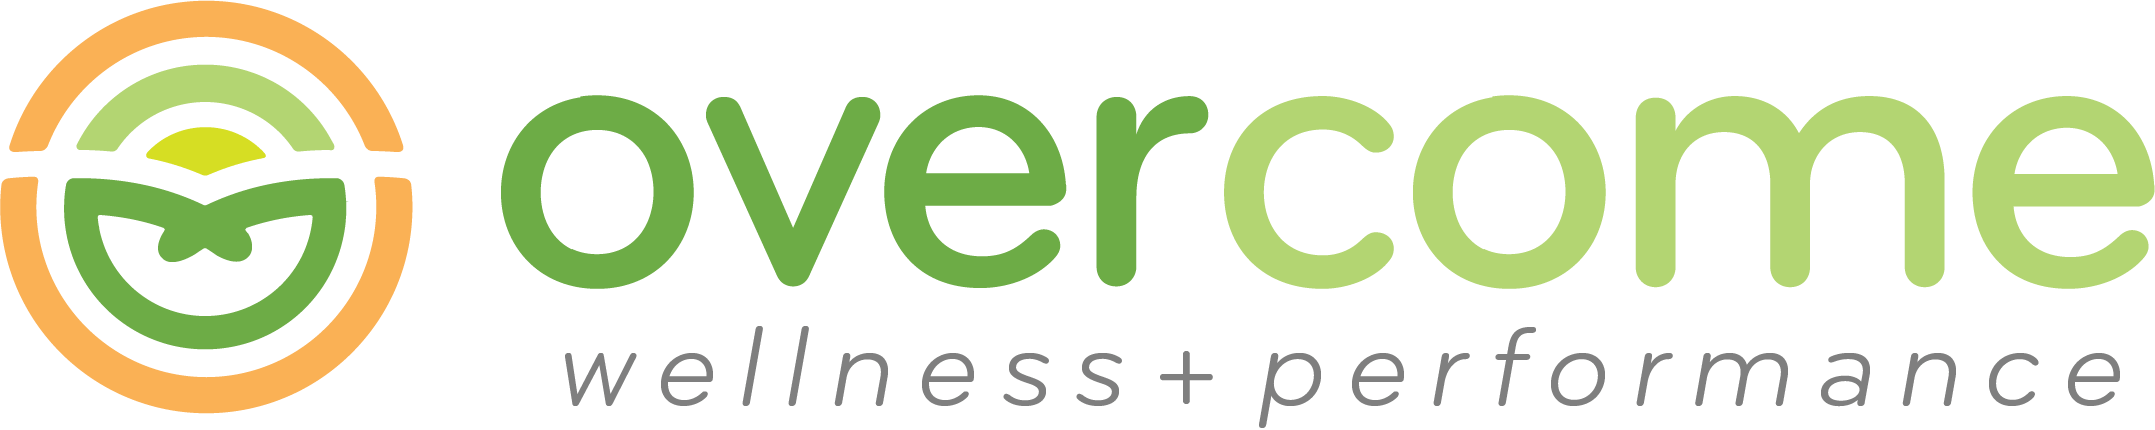 overcome-wellness-and-performance-logo